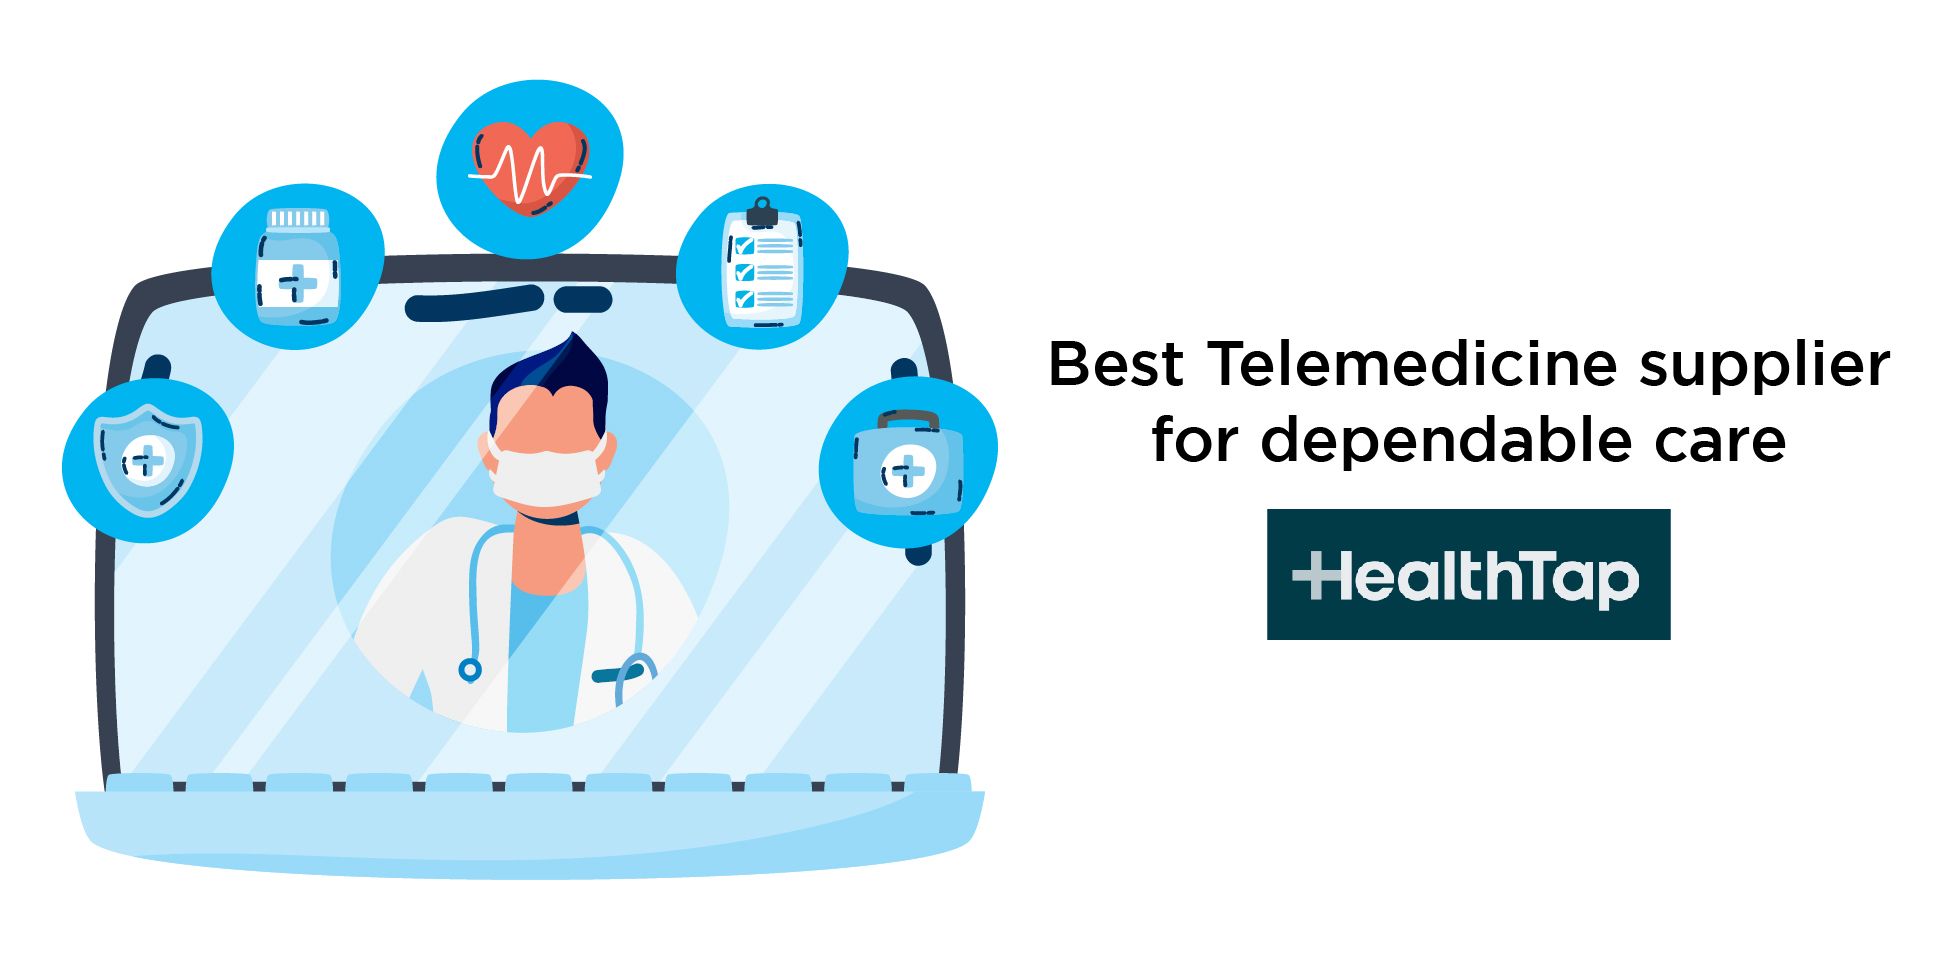 Best Telemedicine supplier for dependable care: HealthTap